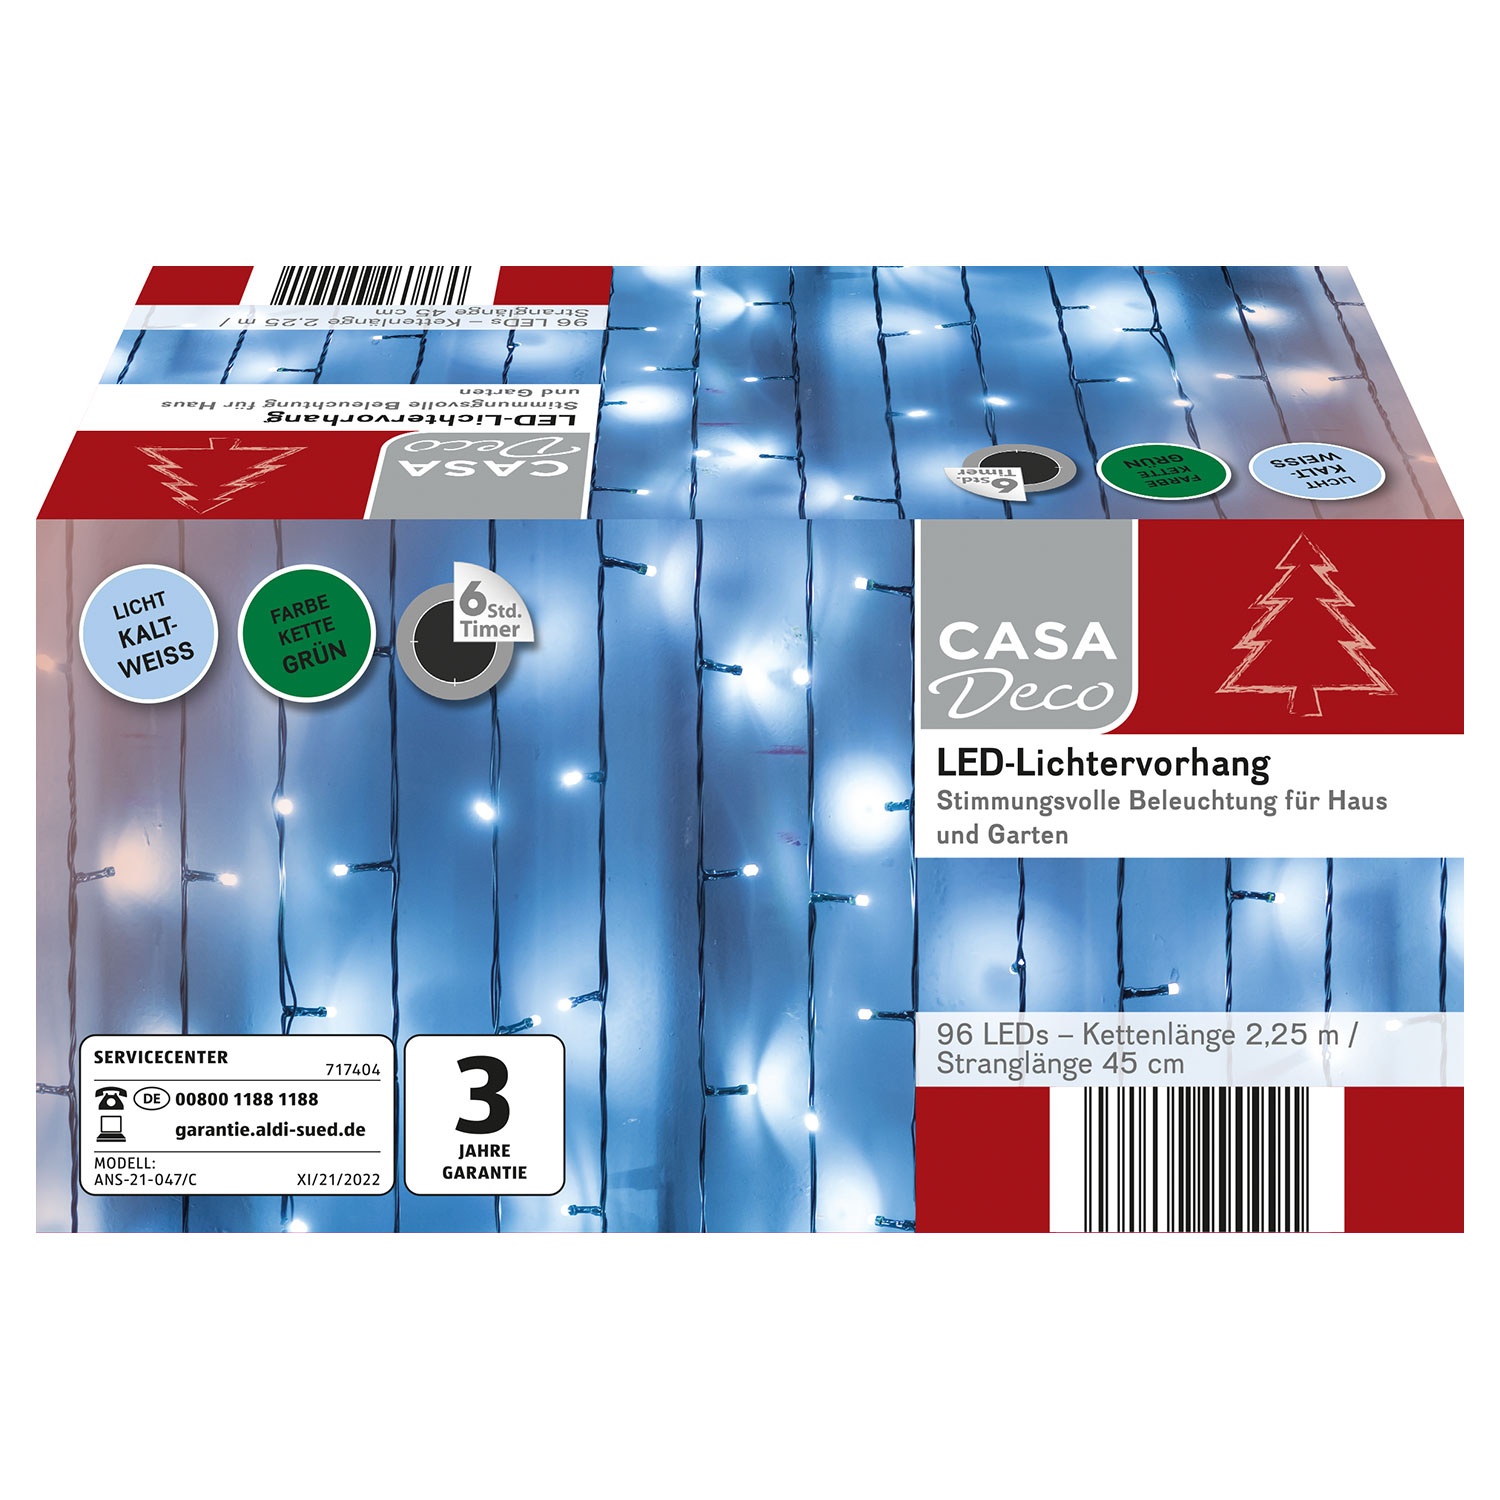 CASA DECO LED-Lichternetz oder -Lichtervorhang